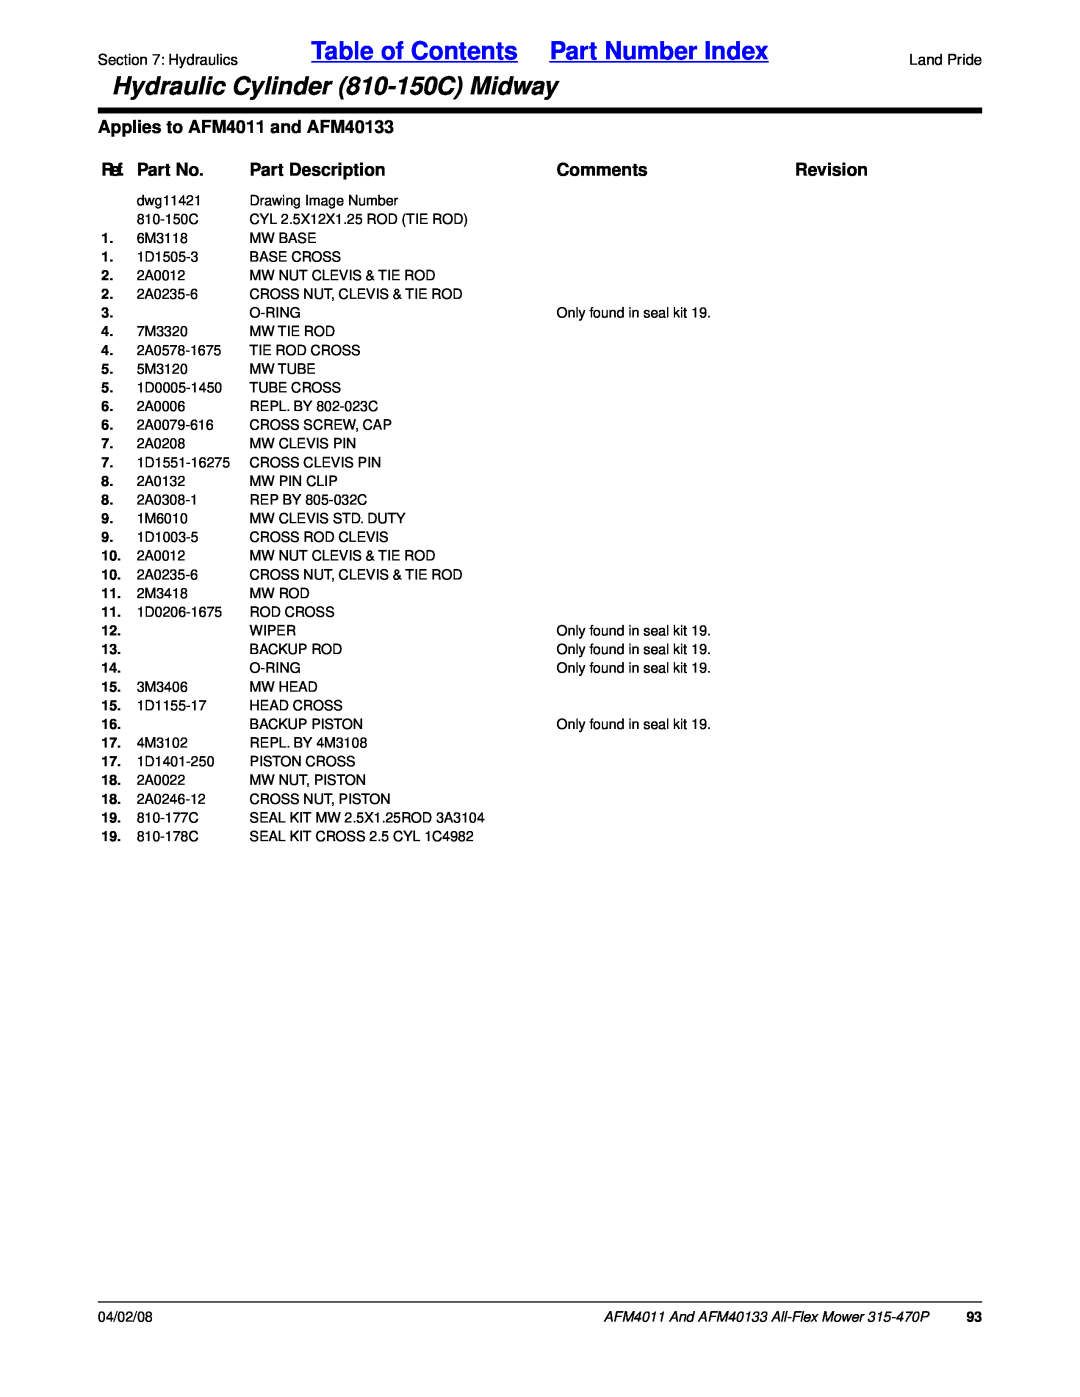 Land Pride AFM40133 Table of Contents Part Number Index, Hydraulic Cylinder 810-150CMidway, Ref. Part No, Part Description 